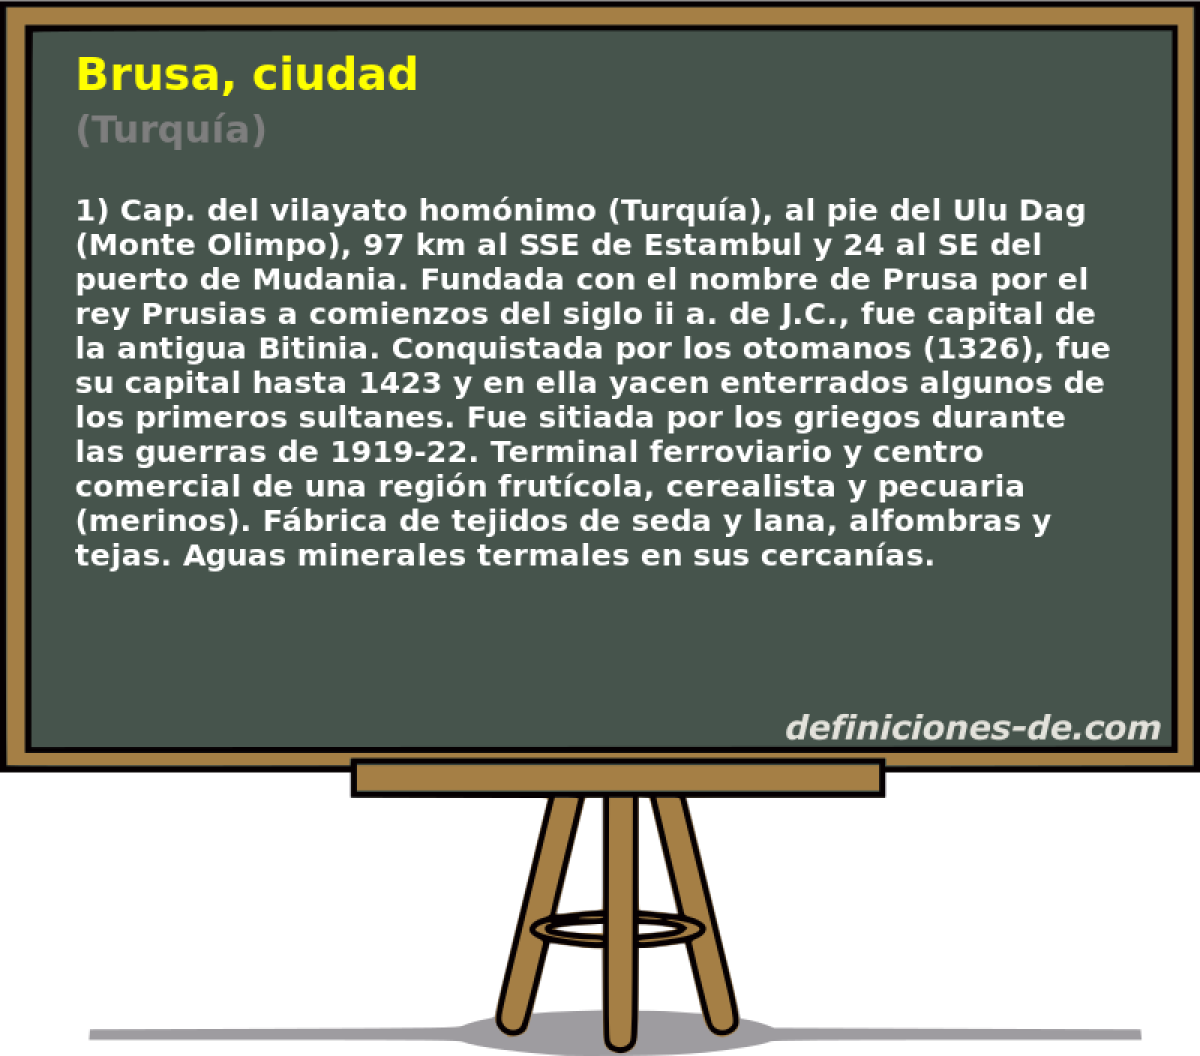 Brusa, ciudad (Turqua)